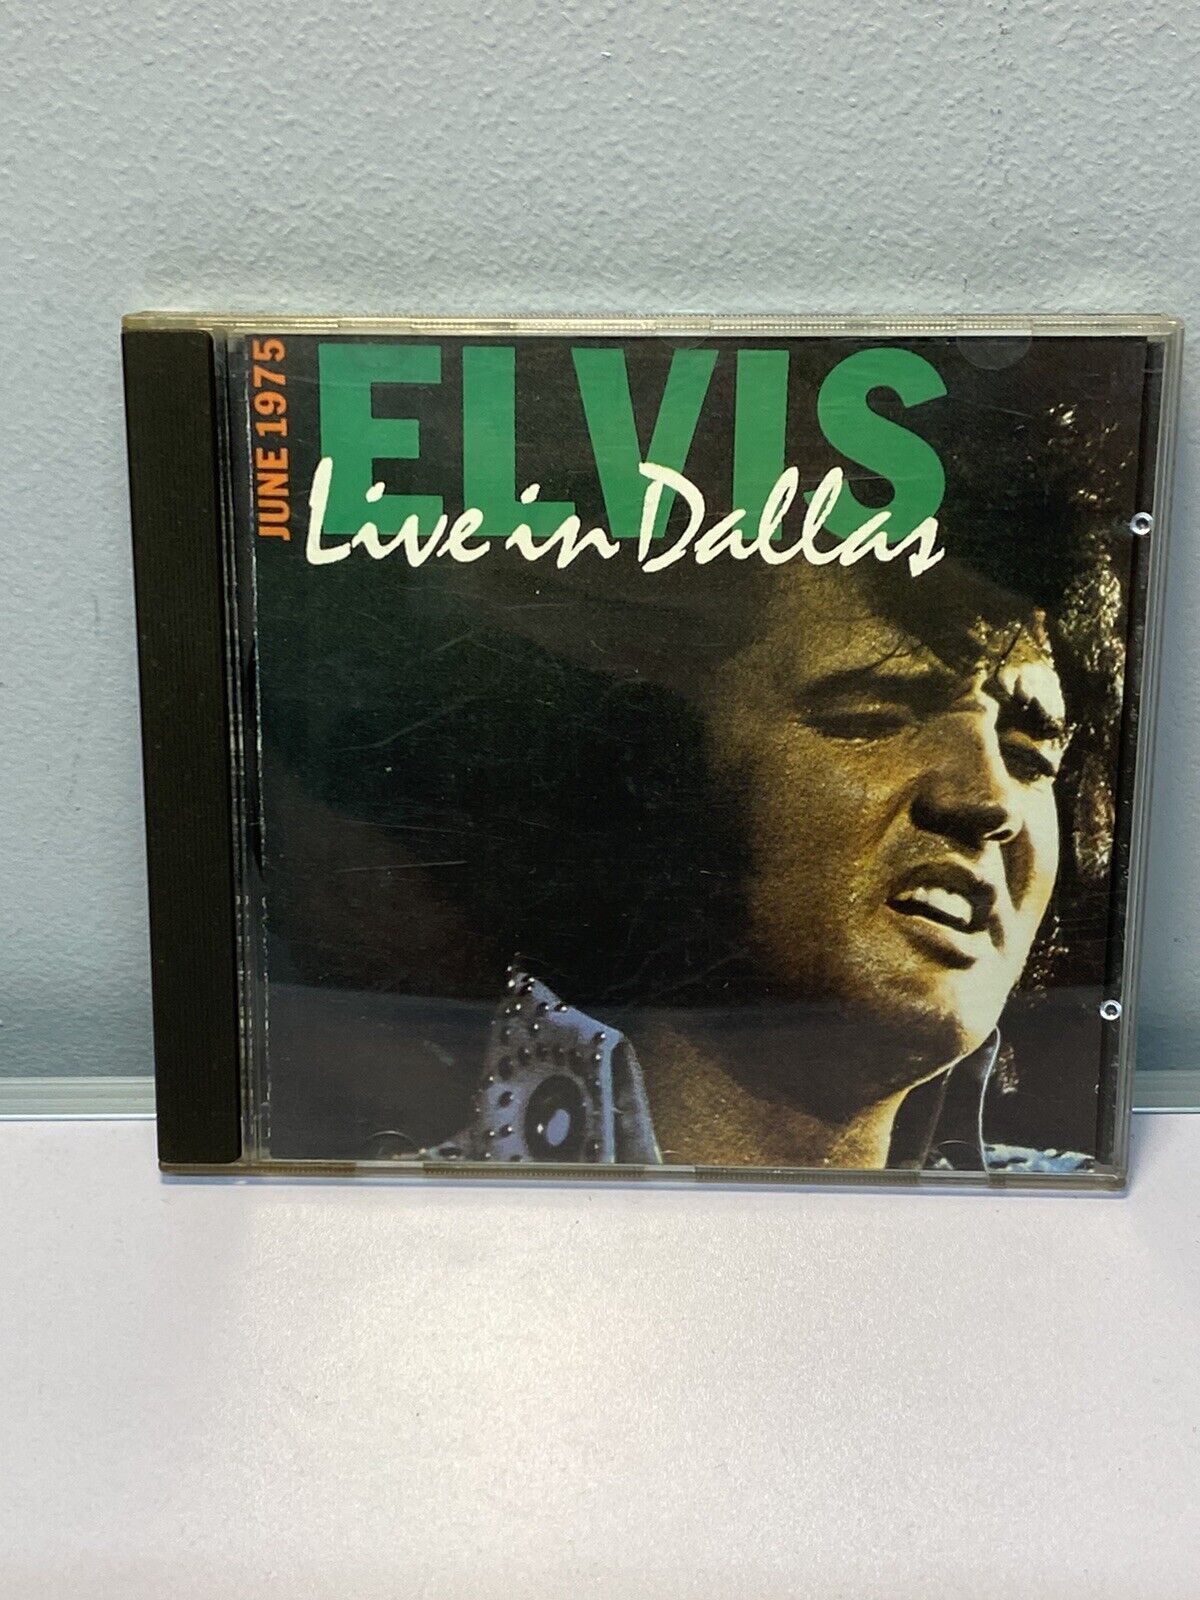 Elvis Live In Dallas June 1975 CD Elvis Presley Rare Hard To Find Collectible